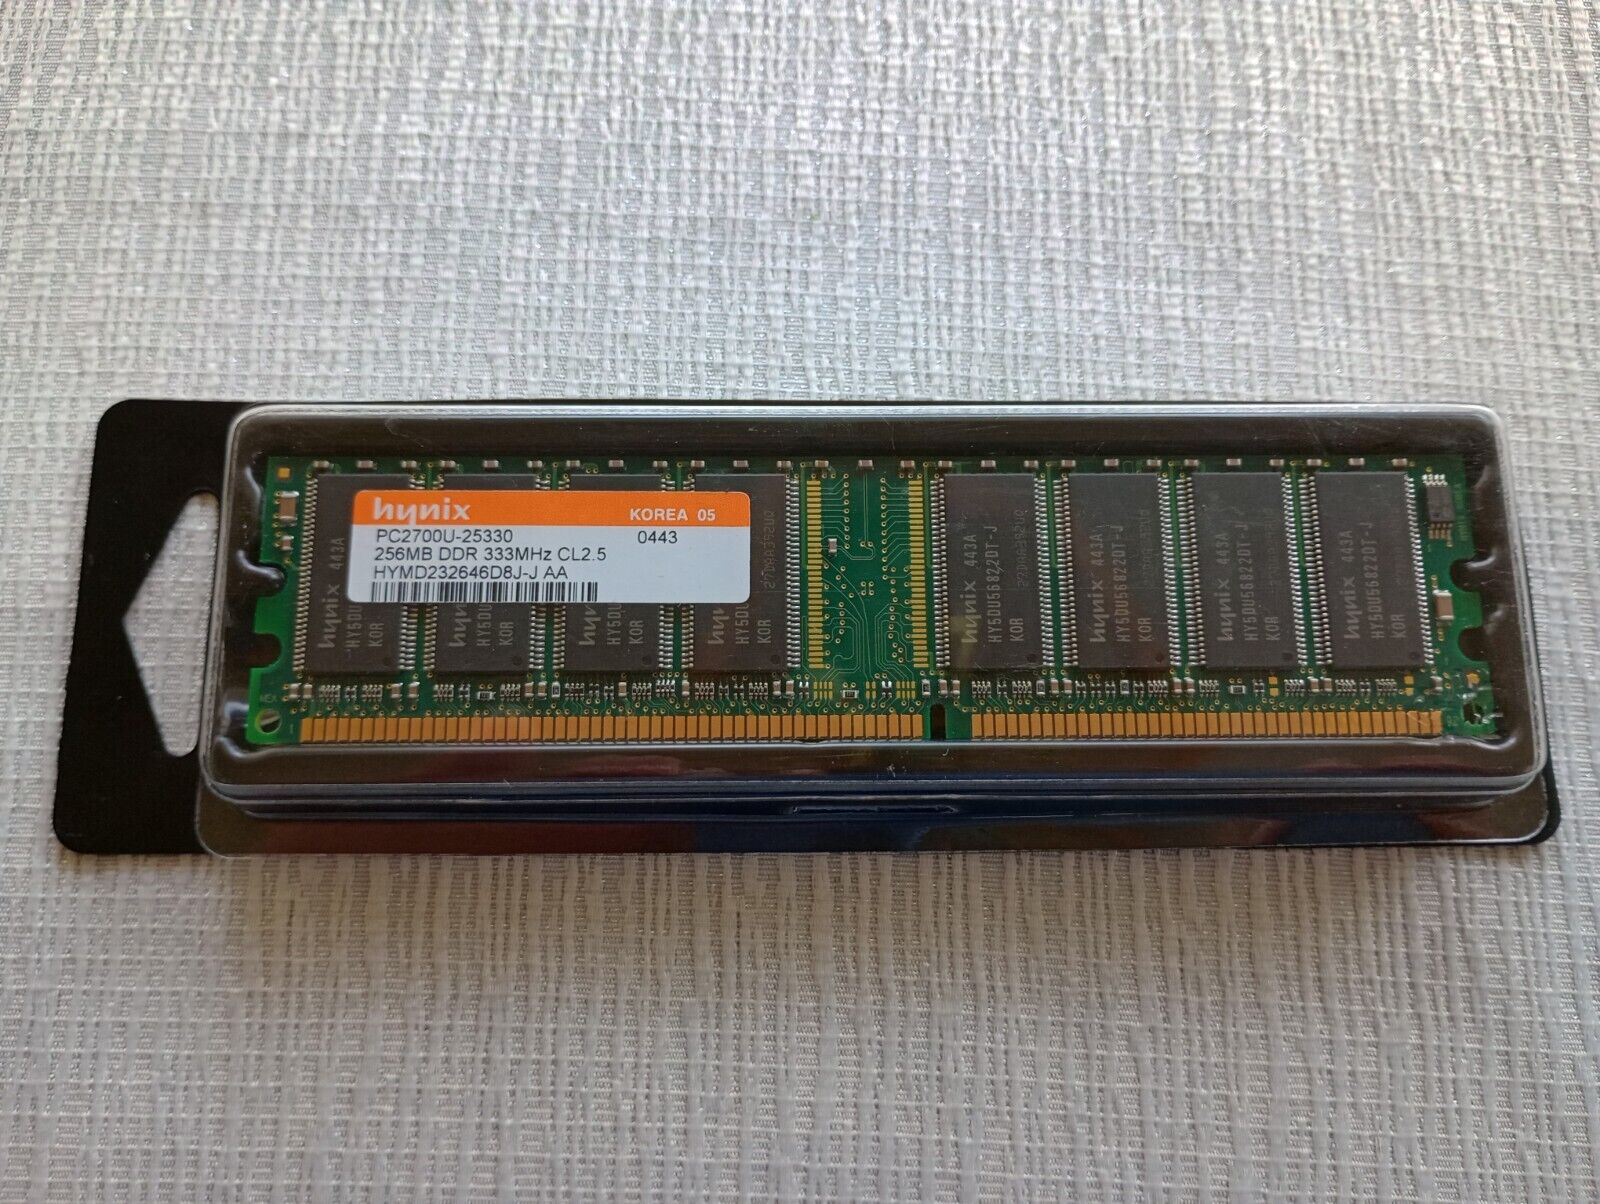 Hynix 256 MB DDR2 DDR2 Memory (PC2700U-25330)